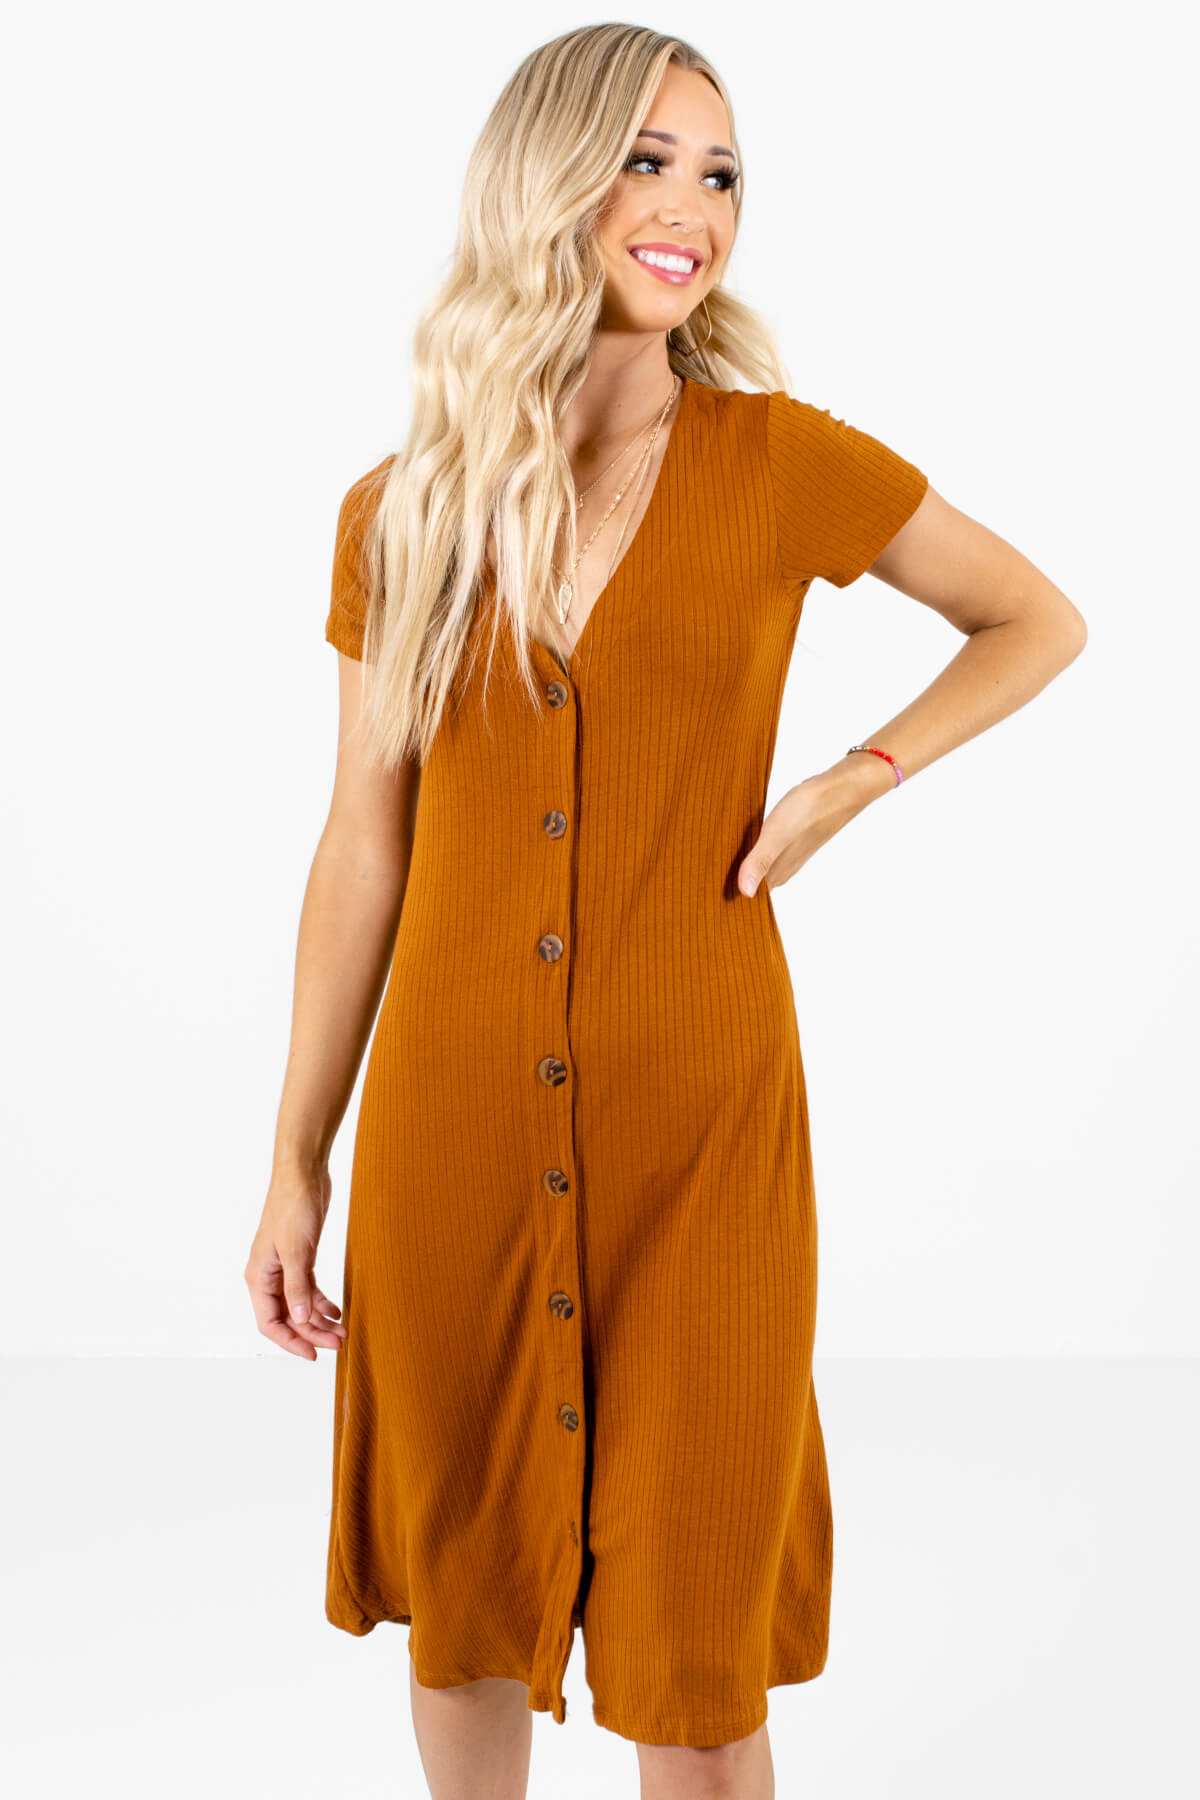 Women’s Rust Orange Business Casual Boutique Clothing